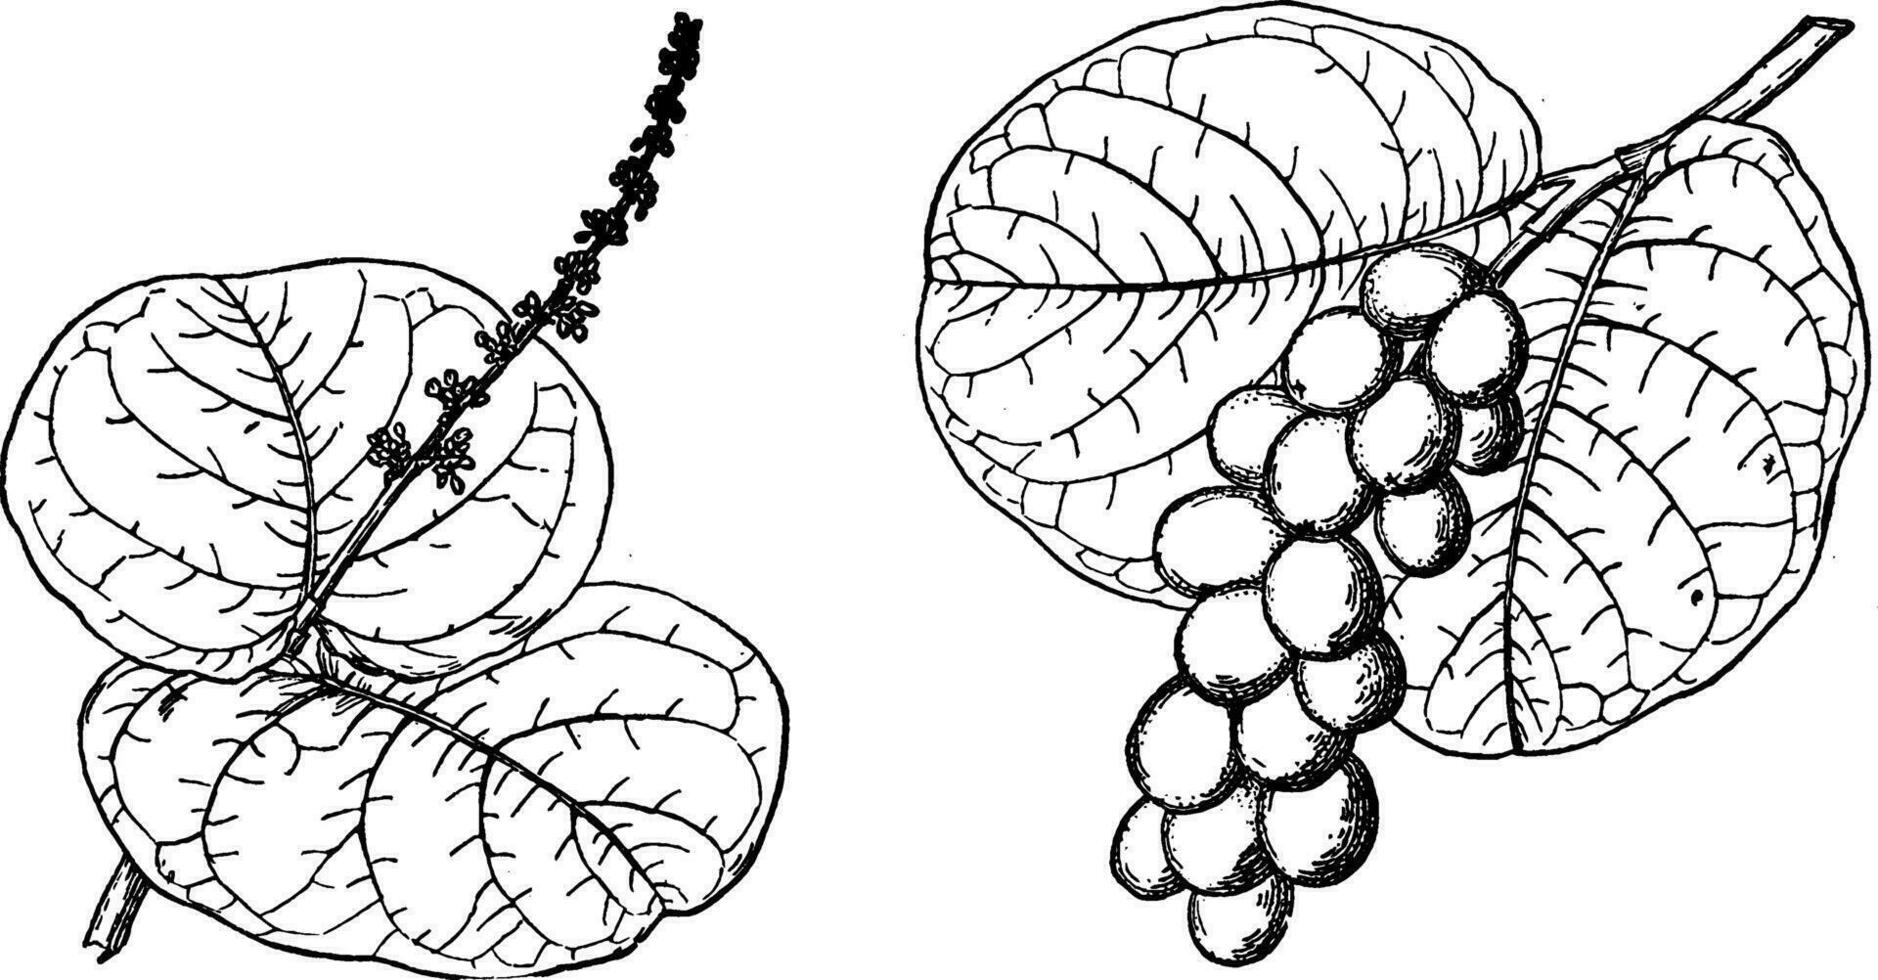 branche de mer grain de raisin ancien illustration. vecteur